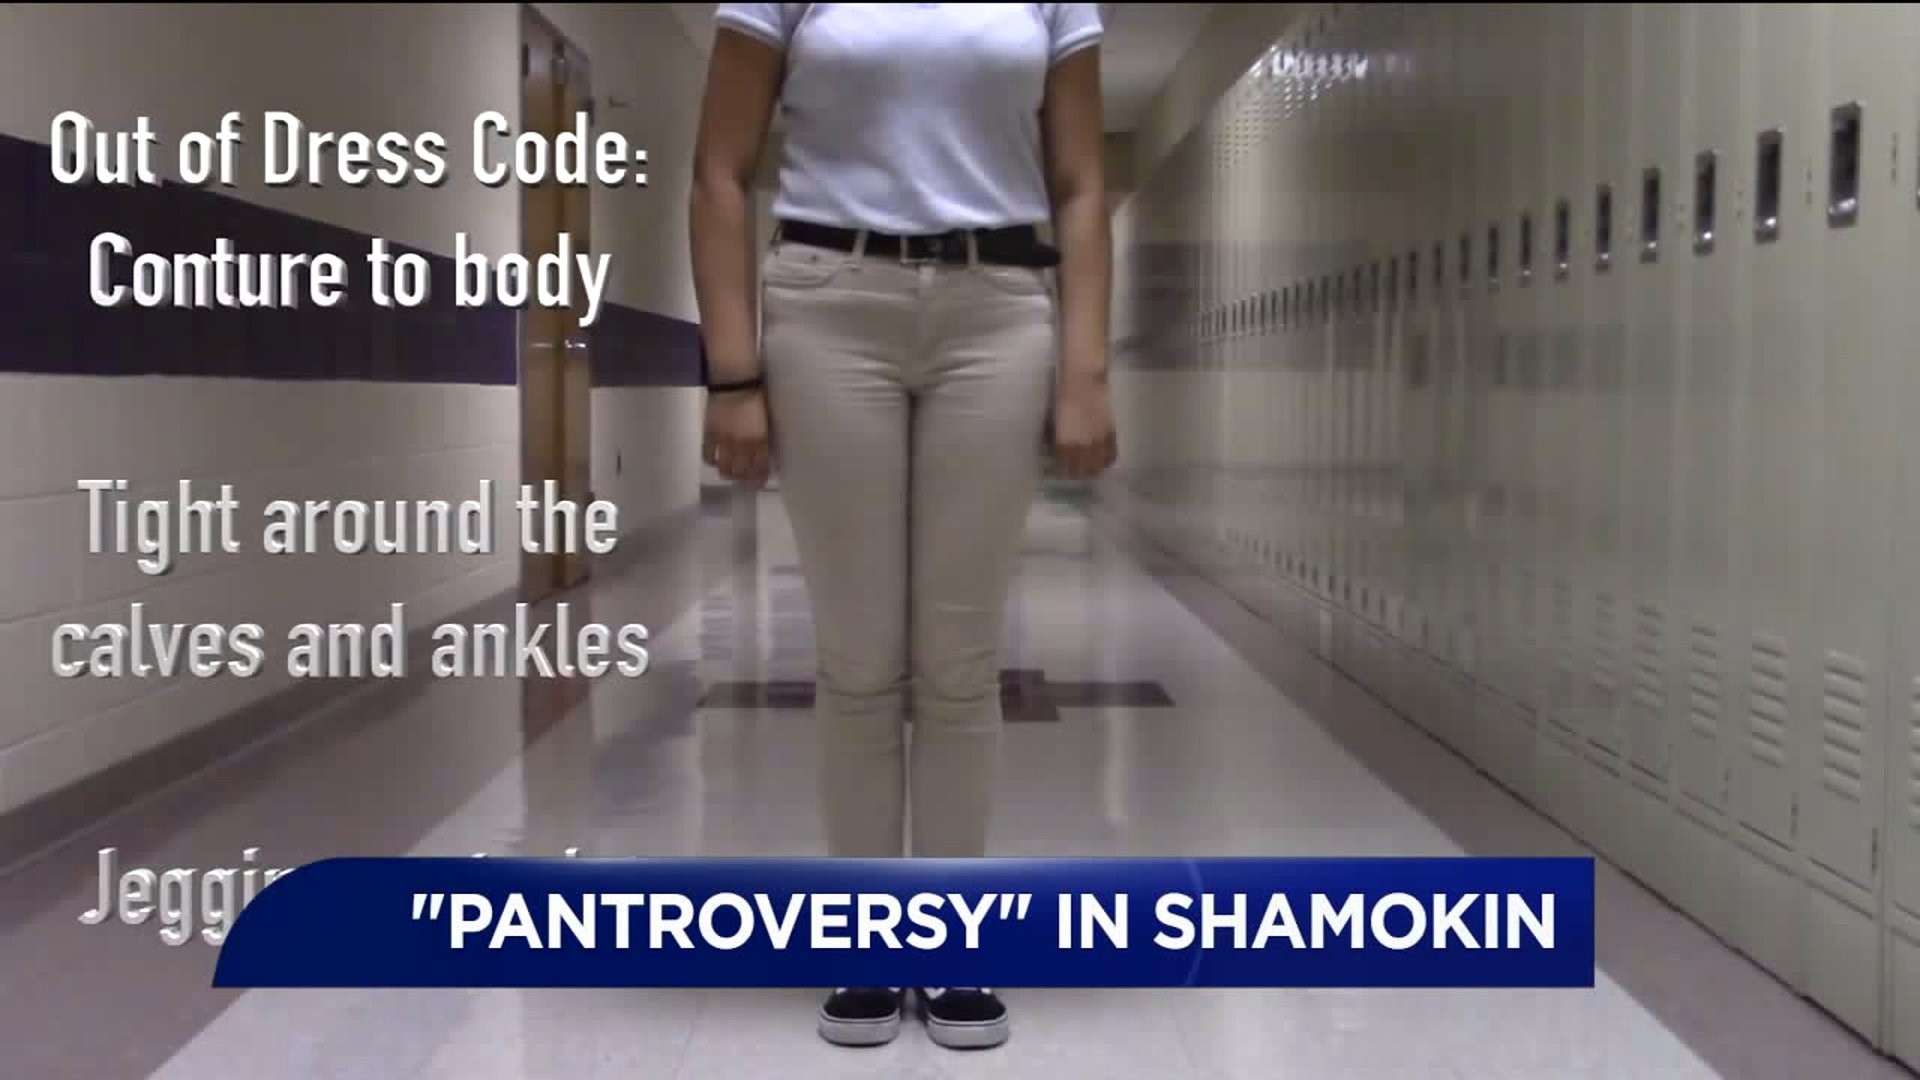 Video About School Dress Code Causes Stir in Shamokin